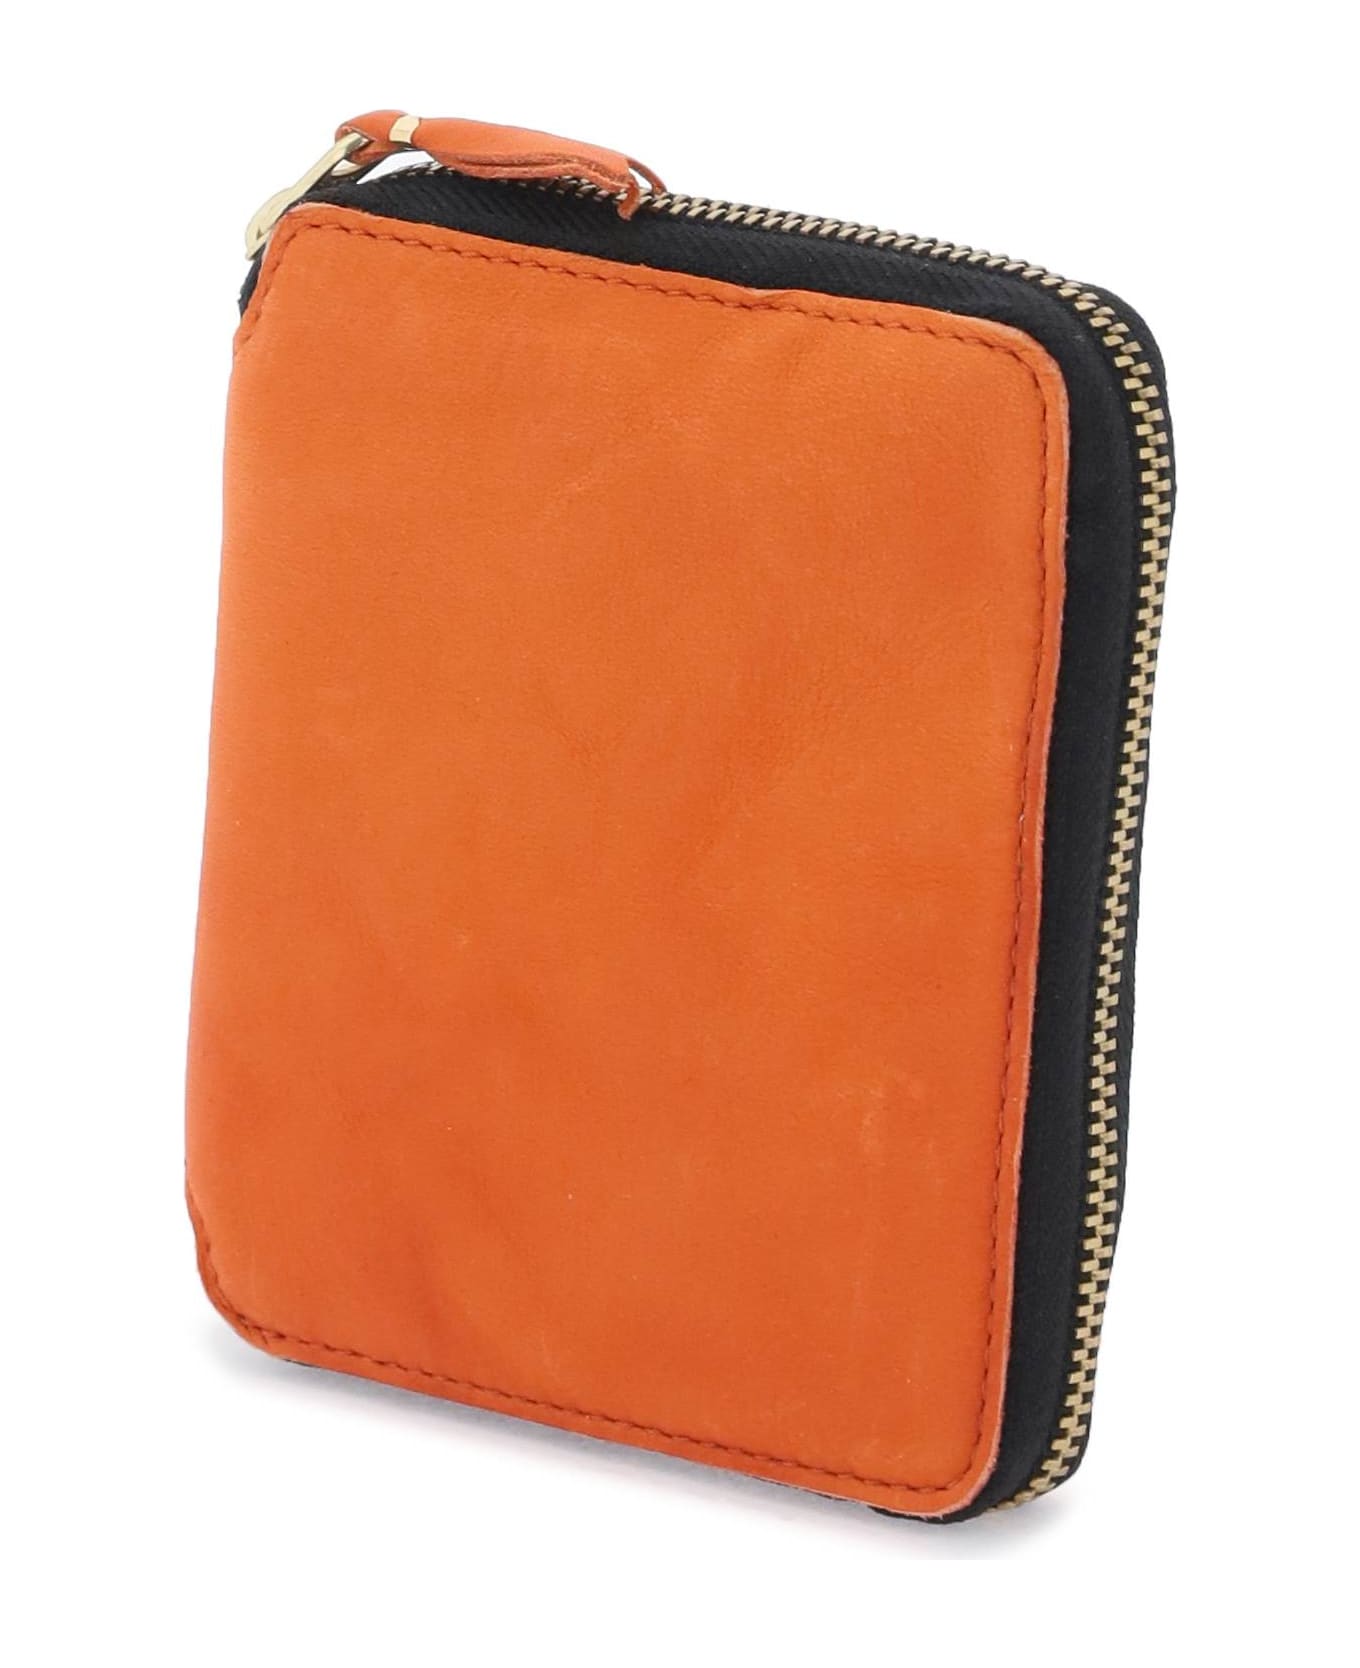 Comme des Garçons Wallet Washed Leather Zip-around Wallet - BURNT ORANGE (Orange)